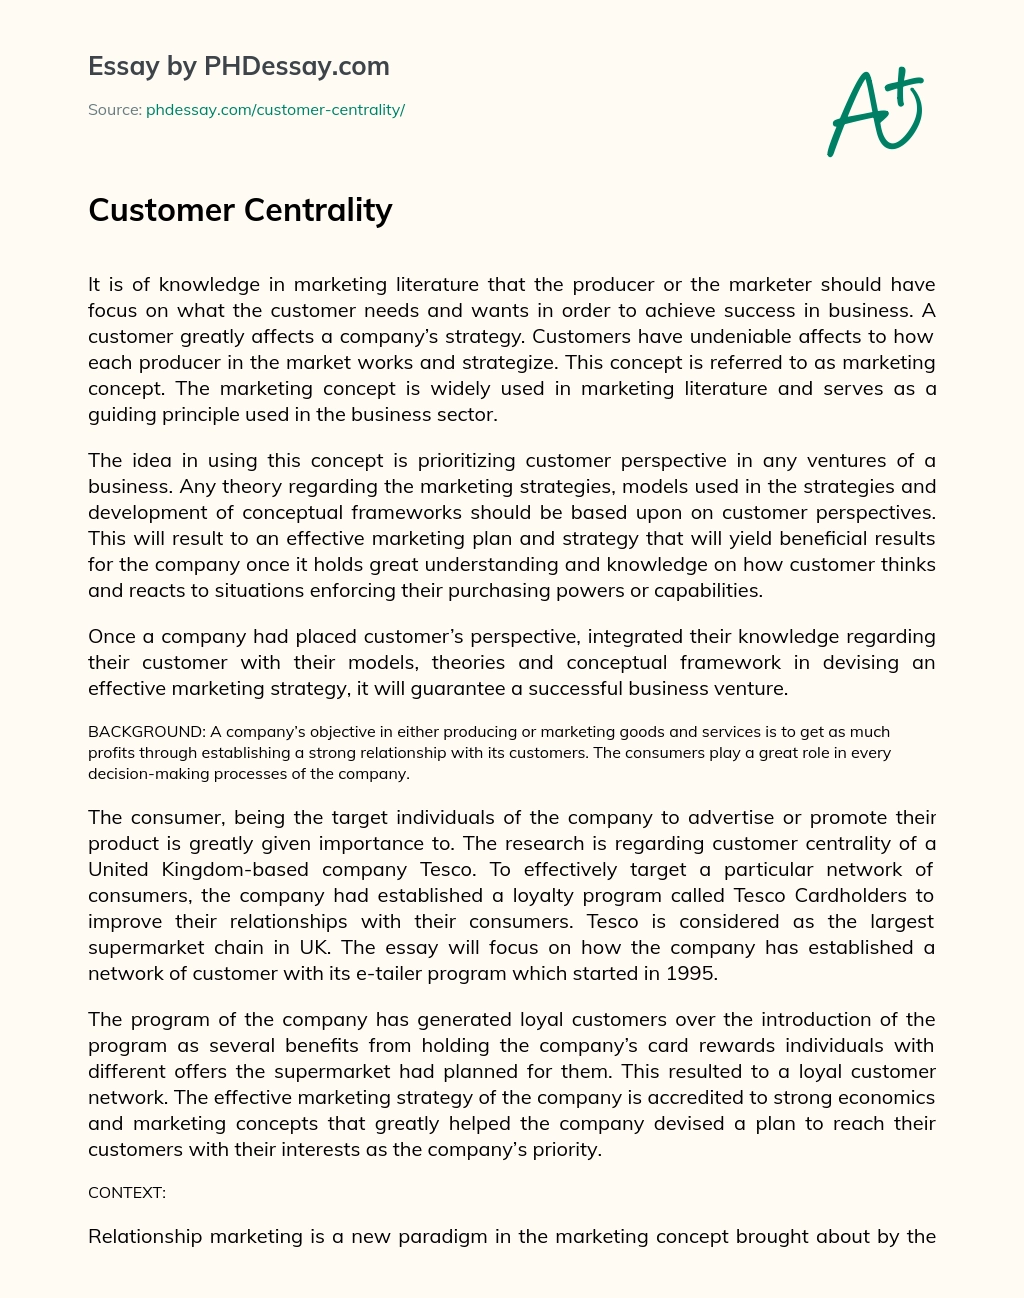 Customer Centrality essay